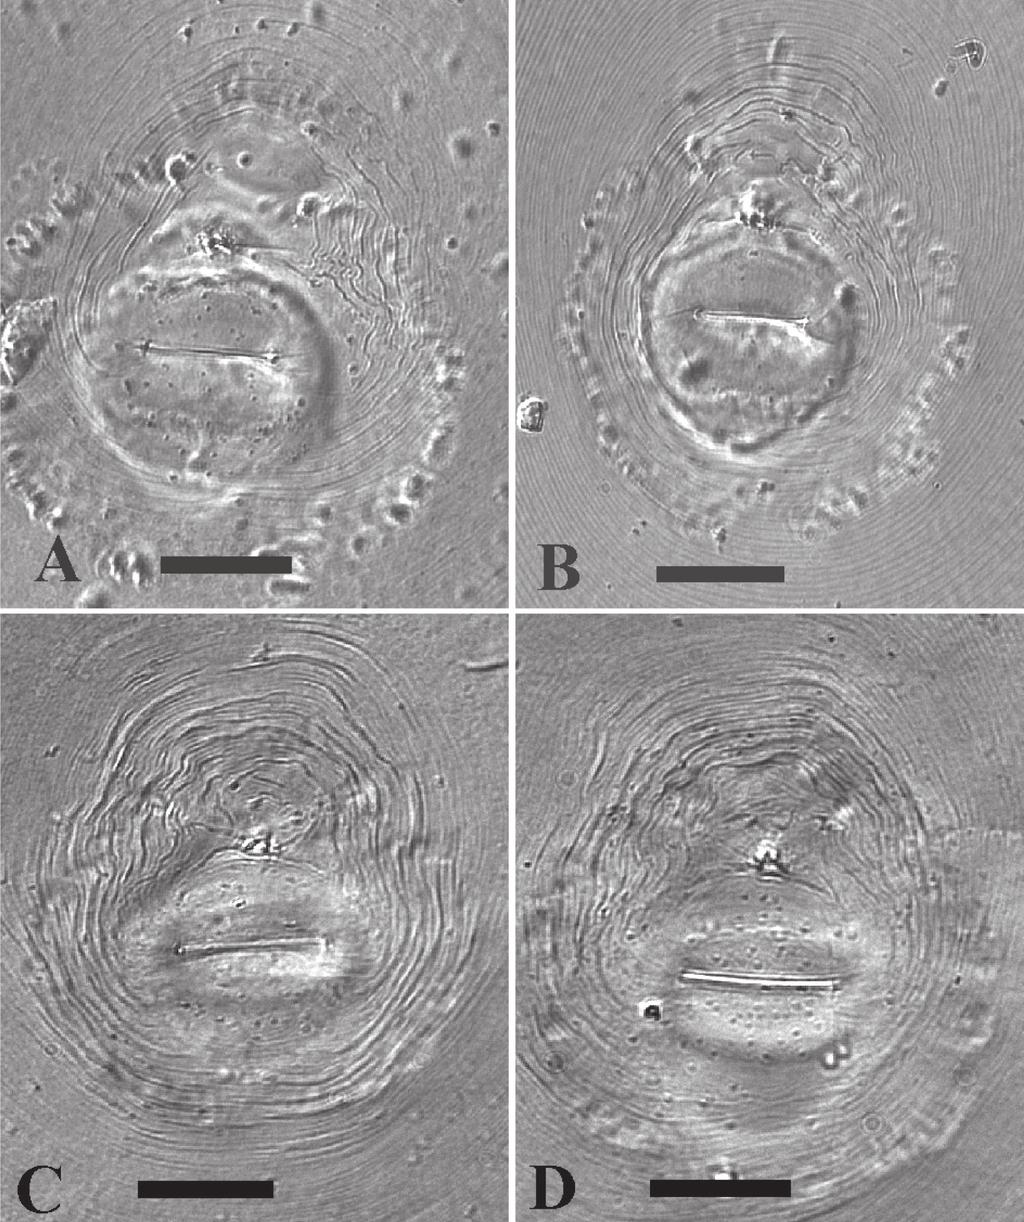 70 Gerrit Karssen et al. / ZooKeys 181: 6777 (2012) Figure 1. LM photographs of perineal patterns of M. mayaguensis (A, B) and M. enterolobii (C, D). Bar = 25 µm.